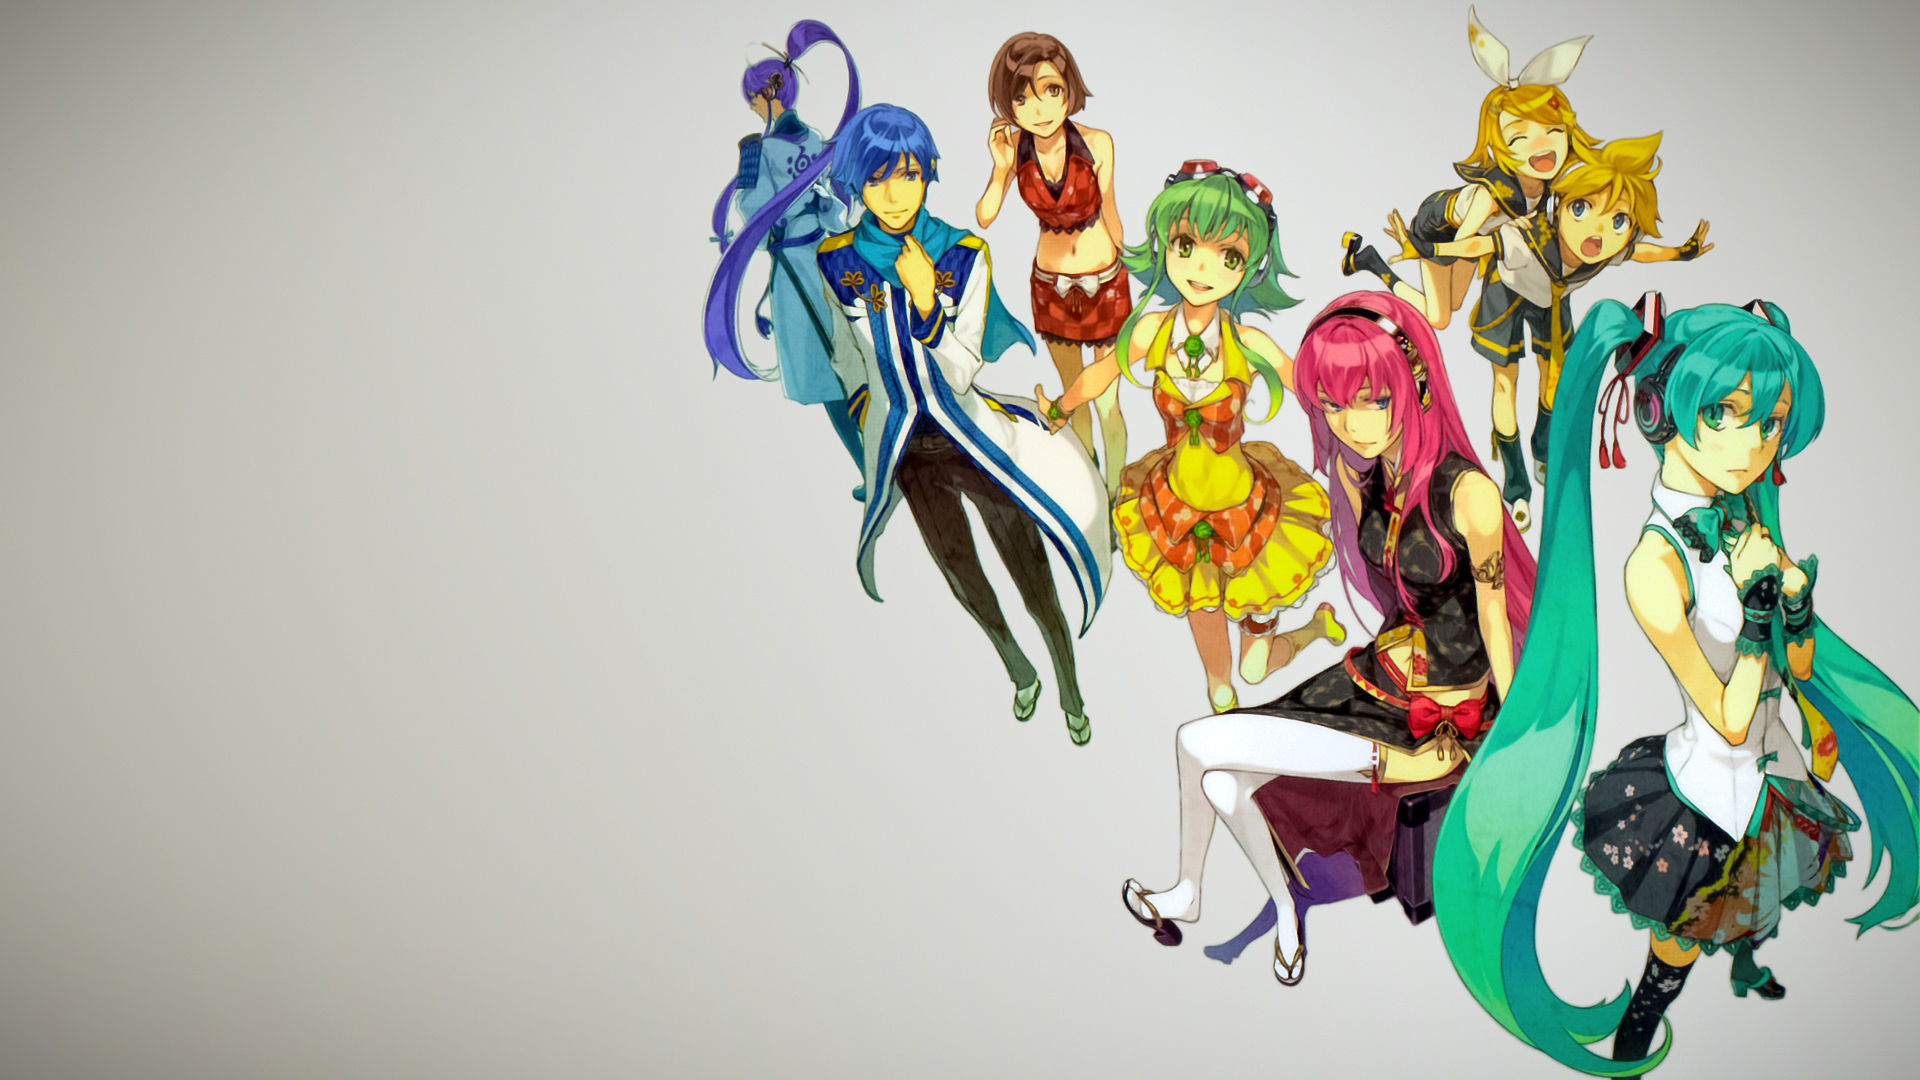 Descarga gratis la imagen Vocaloid, Luka Megurine, Animado, Hatsune Miku, Rin Kagamine, Gumi (Vocaloid), Kaito (Vocaloid), Len Kagamine, Meiko (Vocaloid), Kamui Gakupo en el escritorio de tu PC